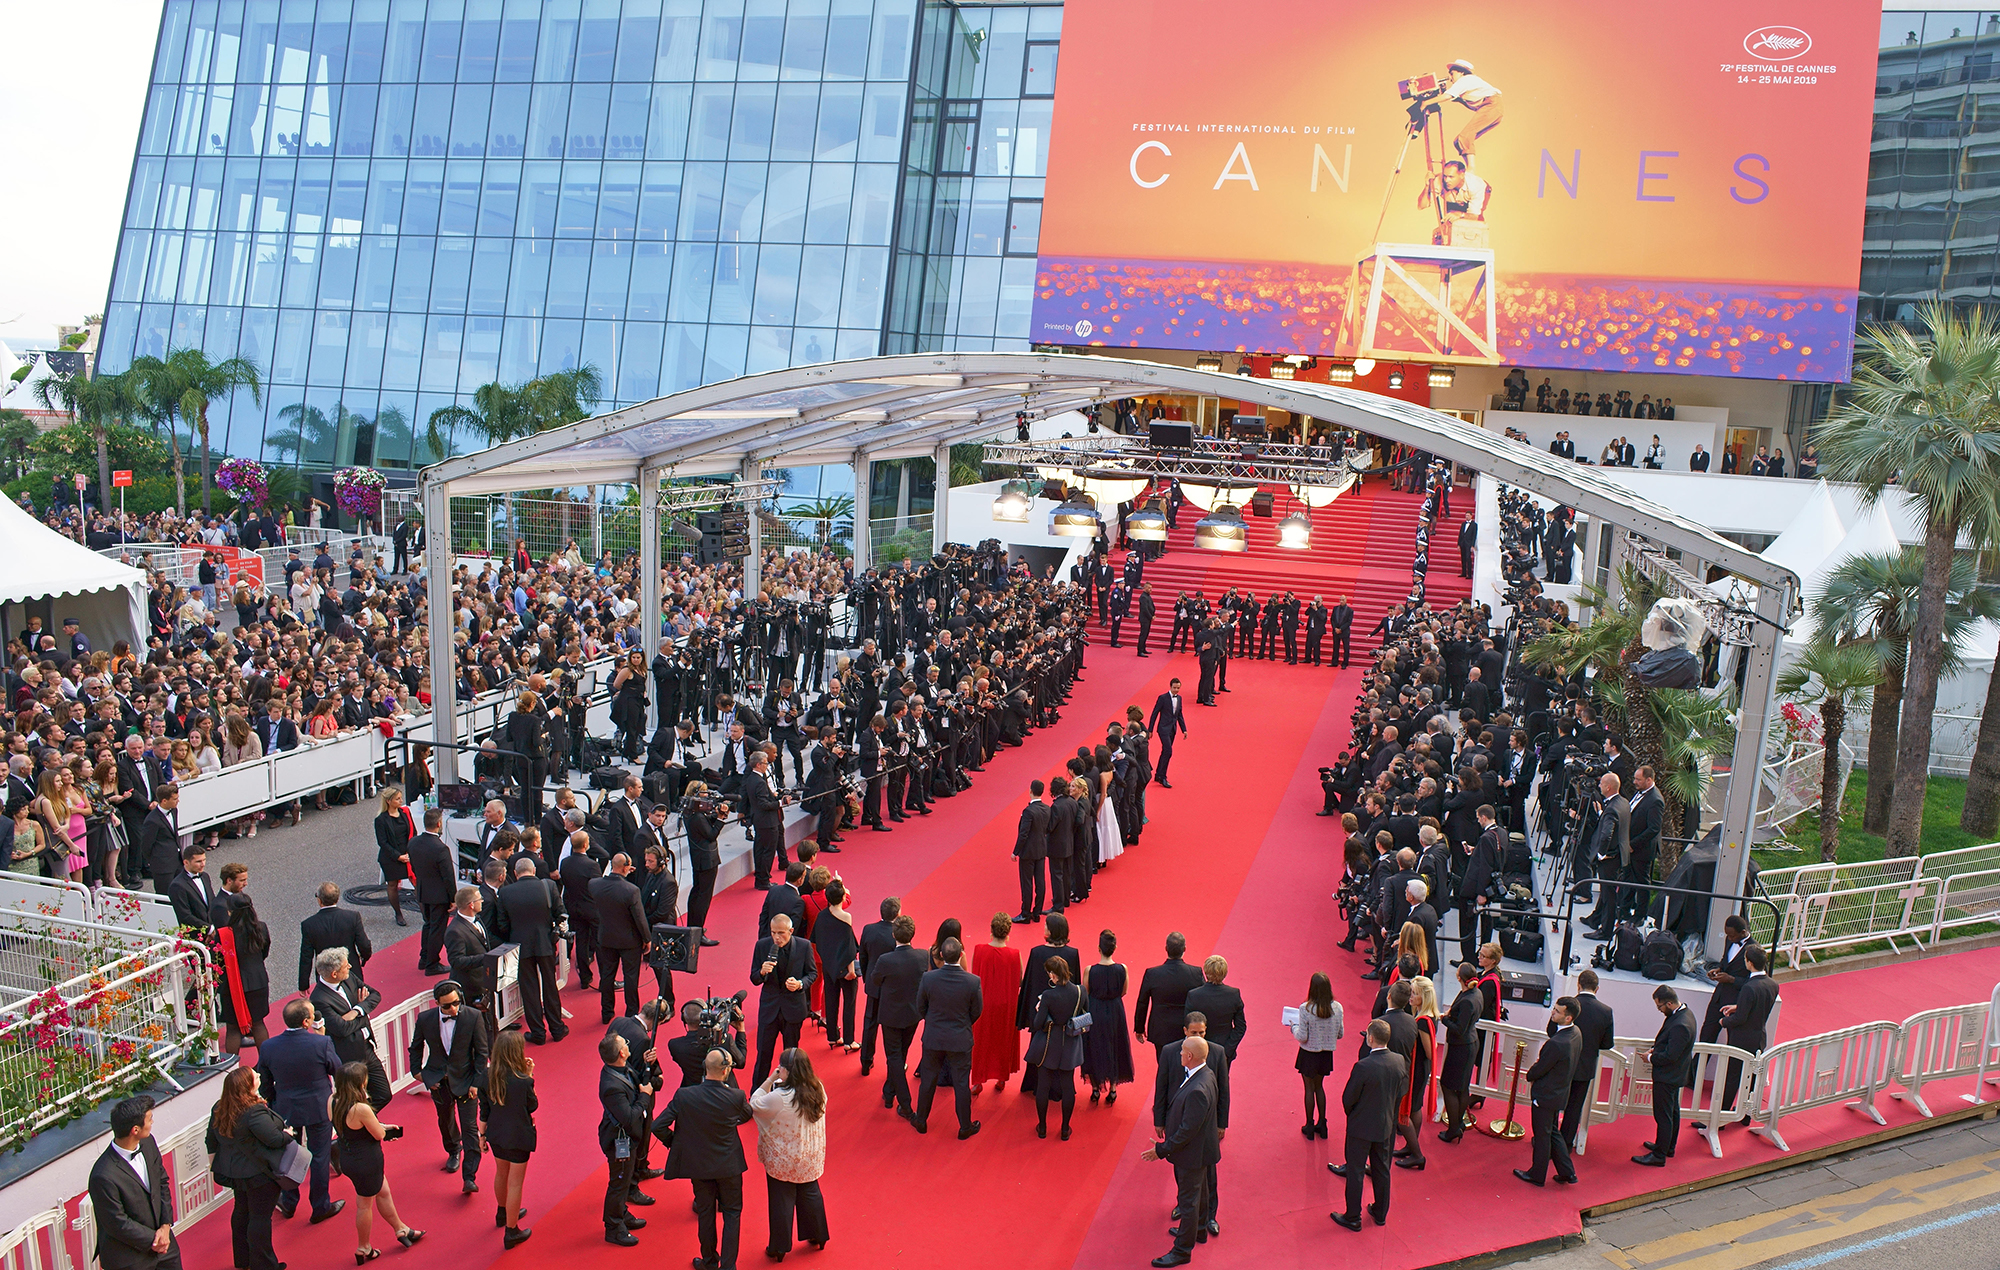 Cannes Film Festival movie event